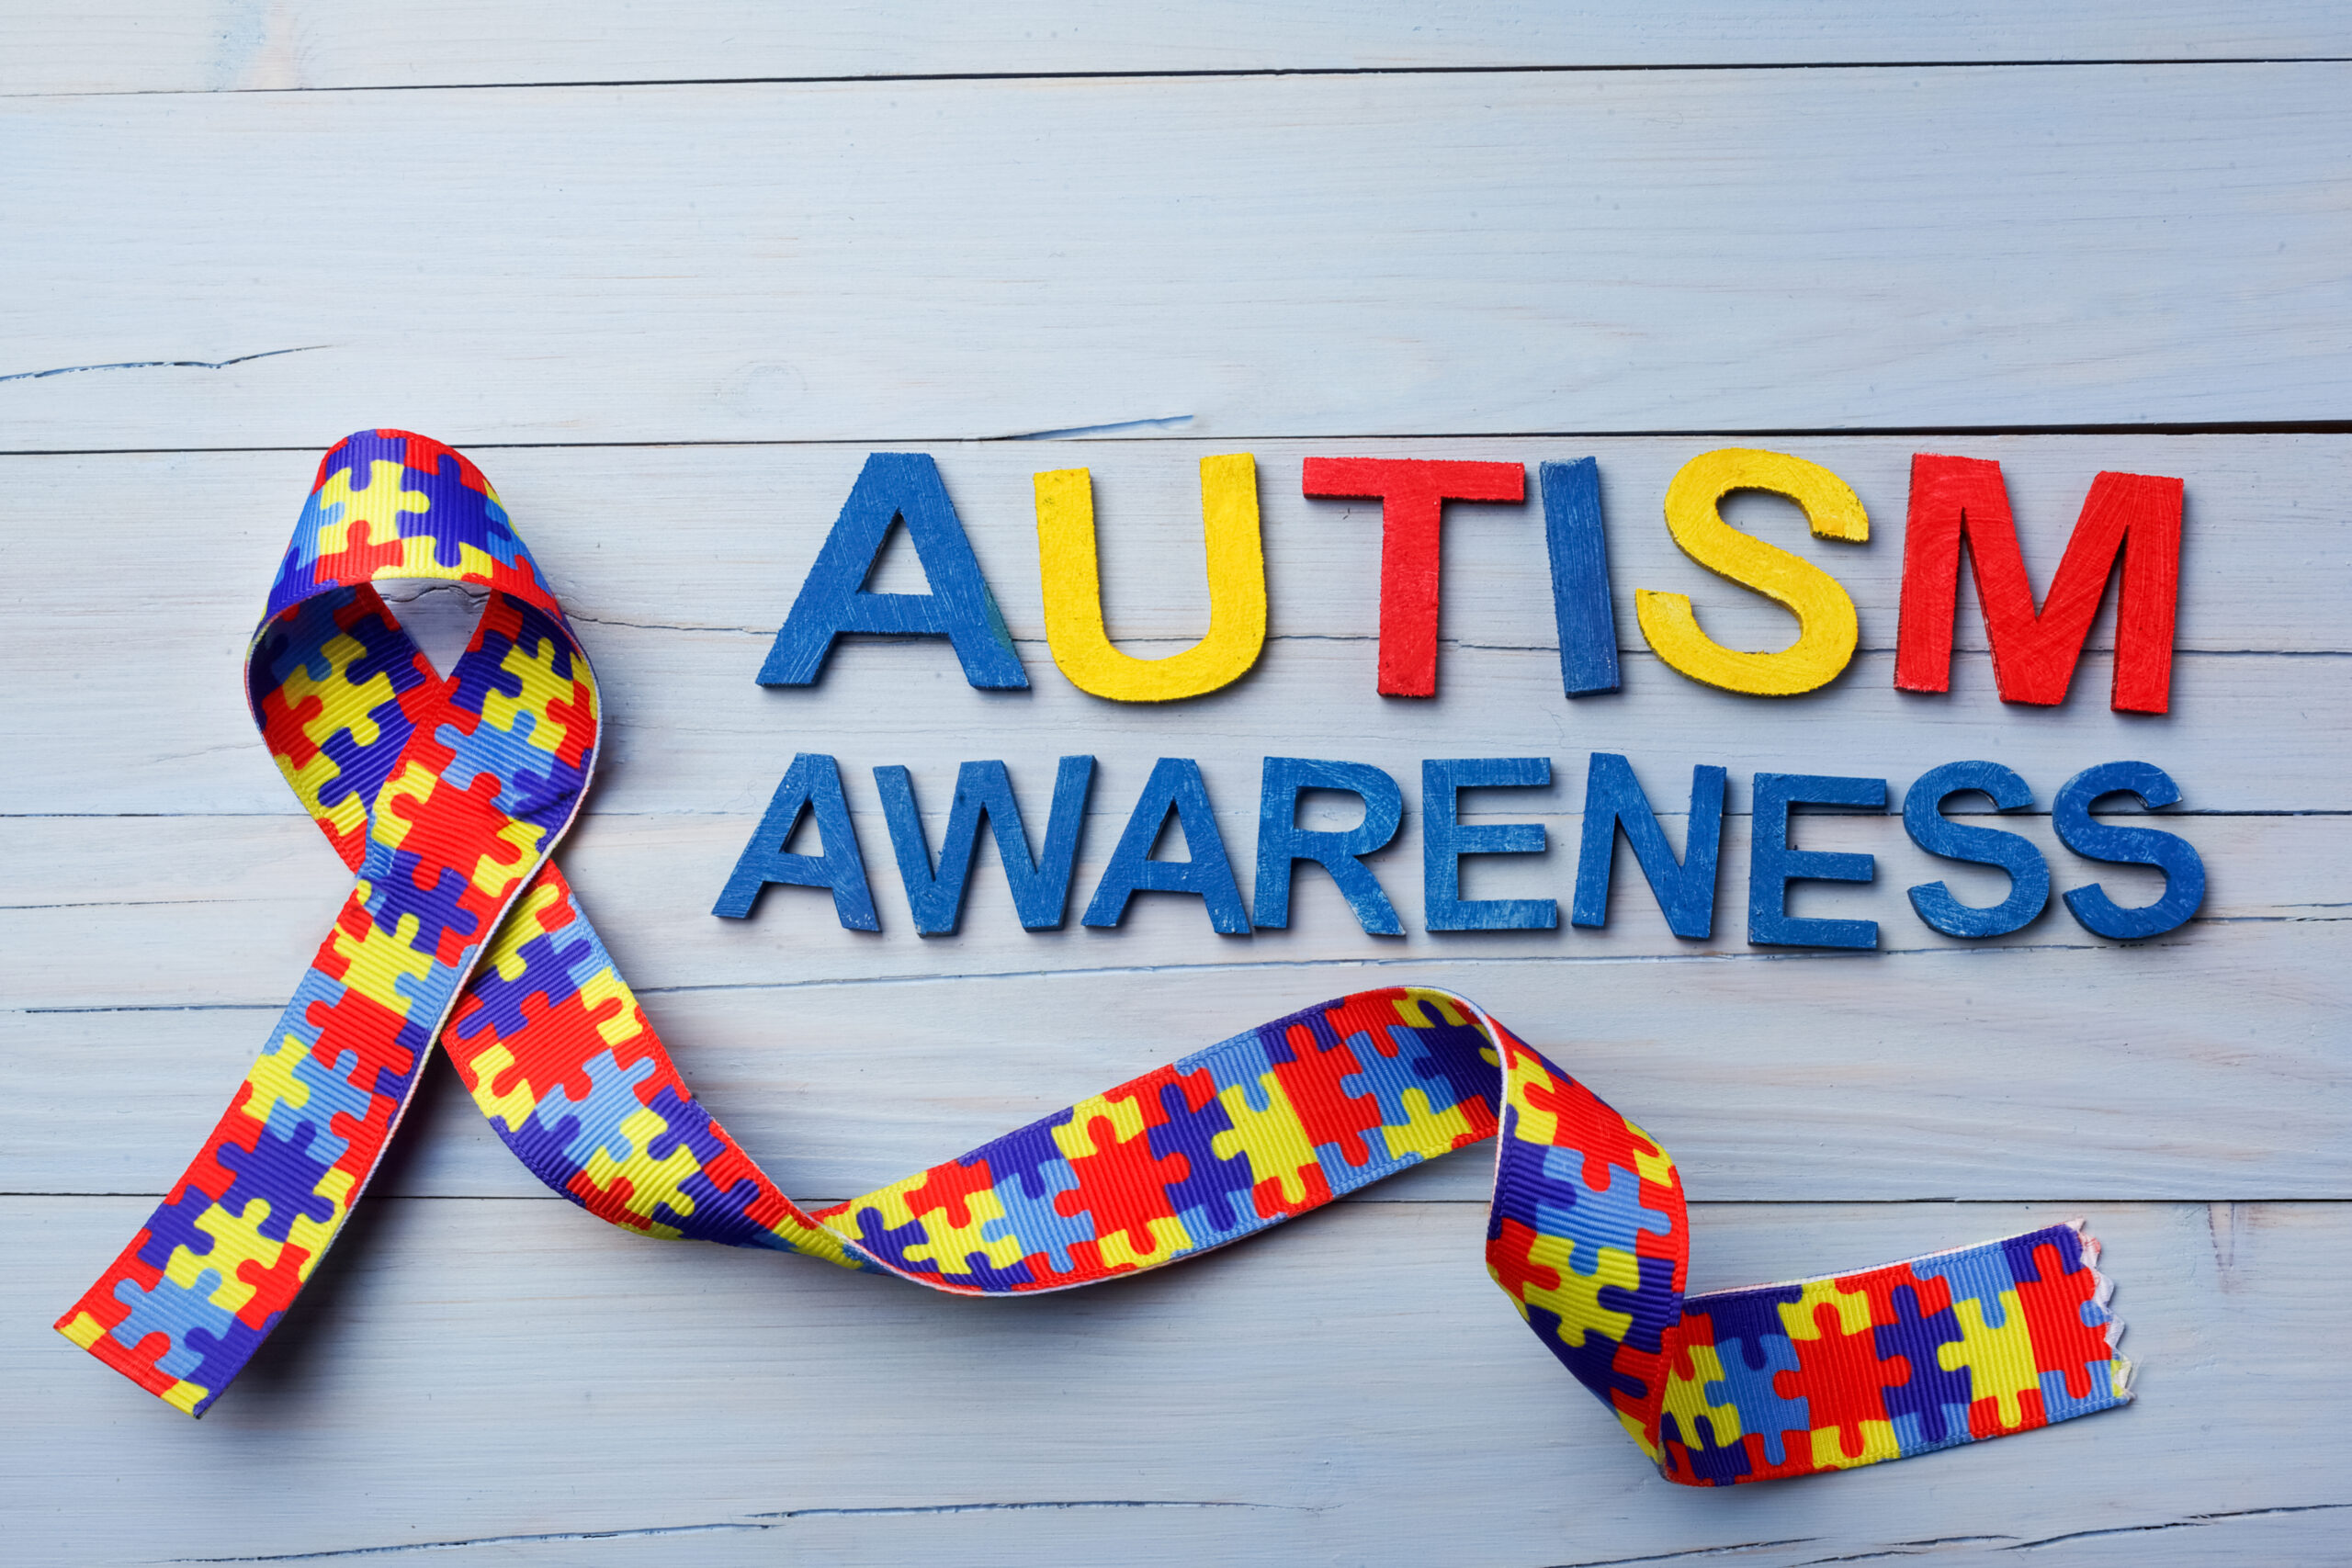 Autism Awareness Shabbat - Friday, April 19, 6:30pm